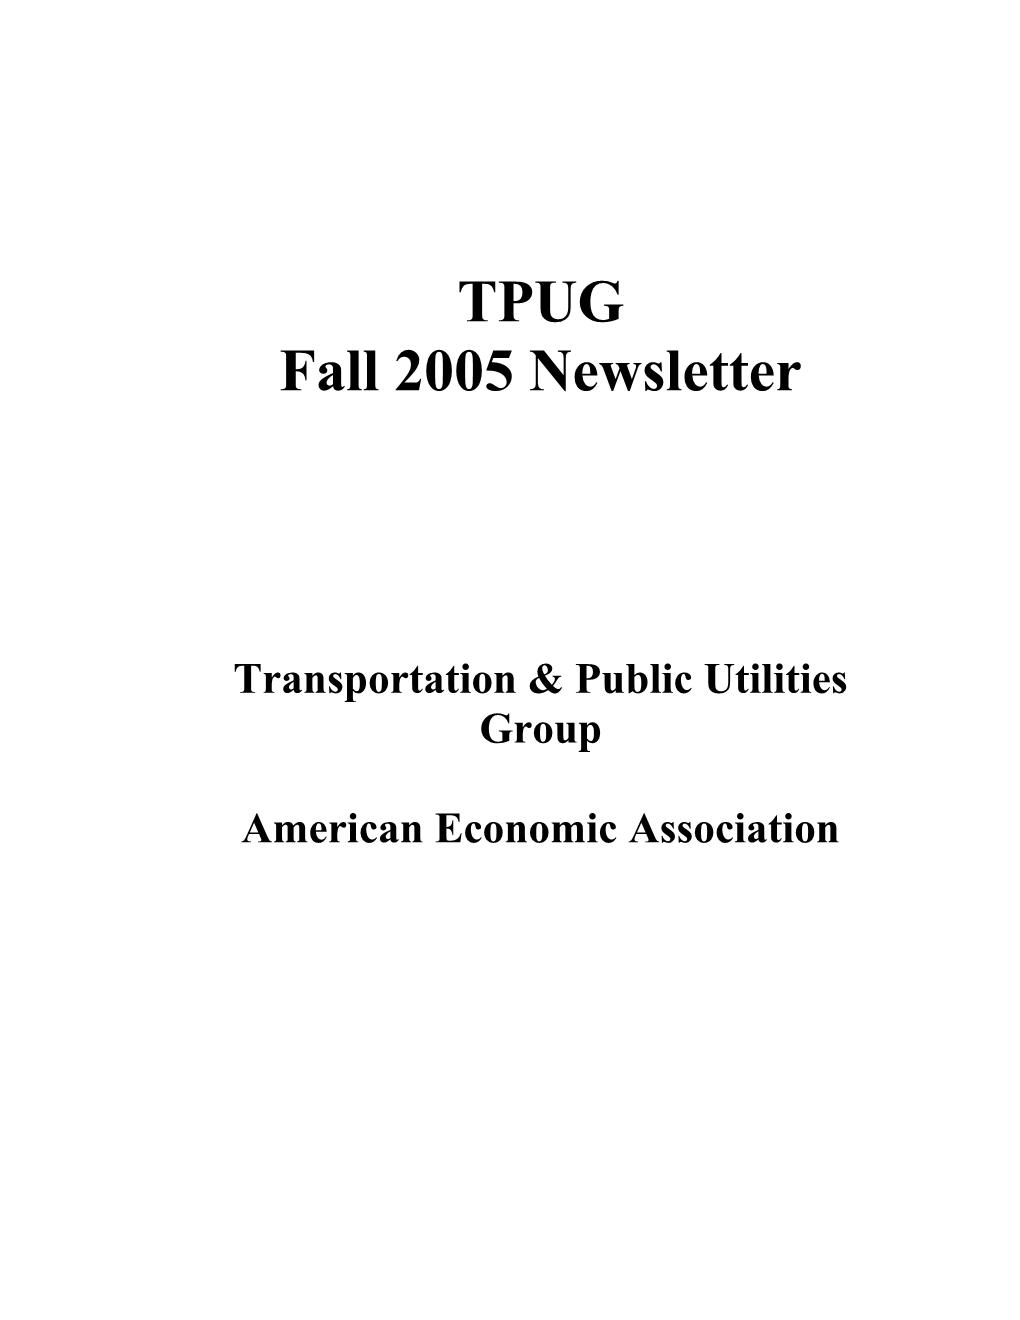 Transportation & Public Utilities Group